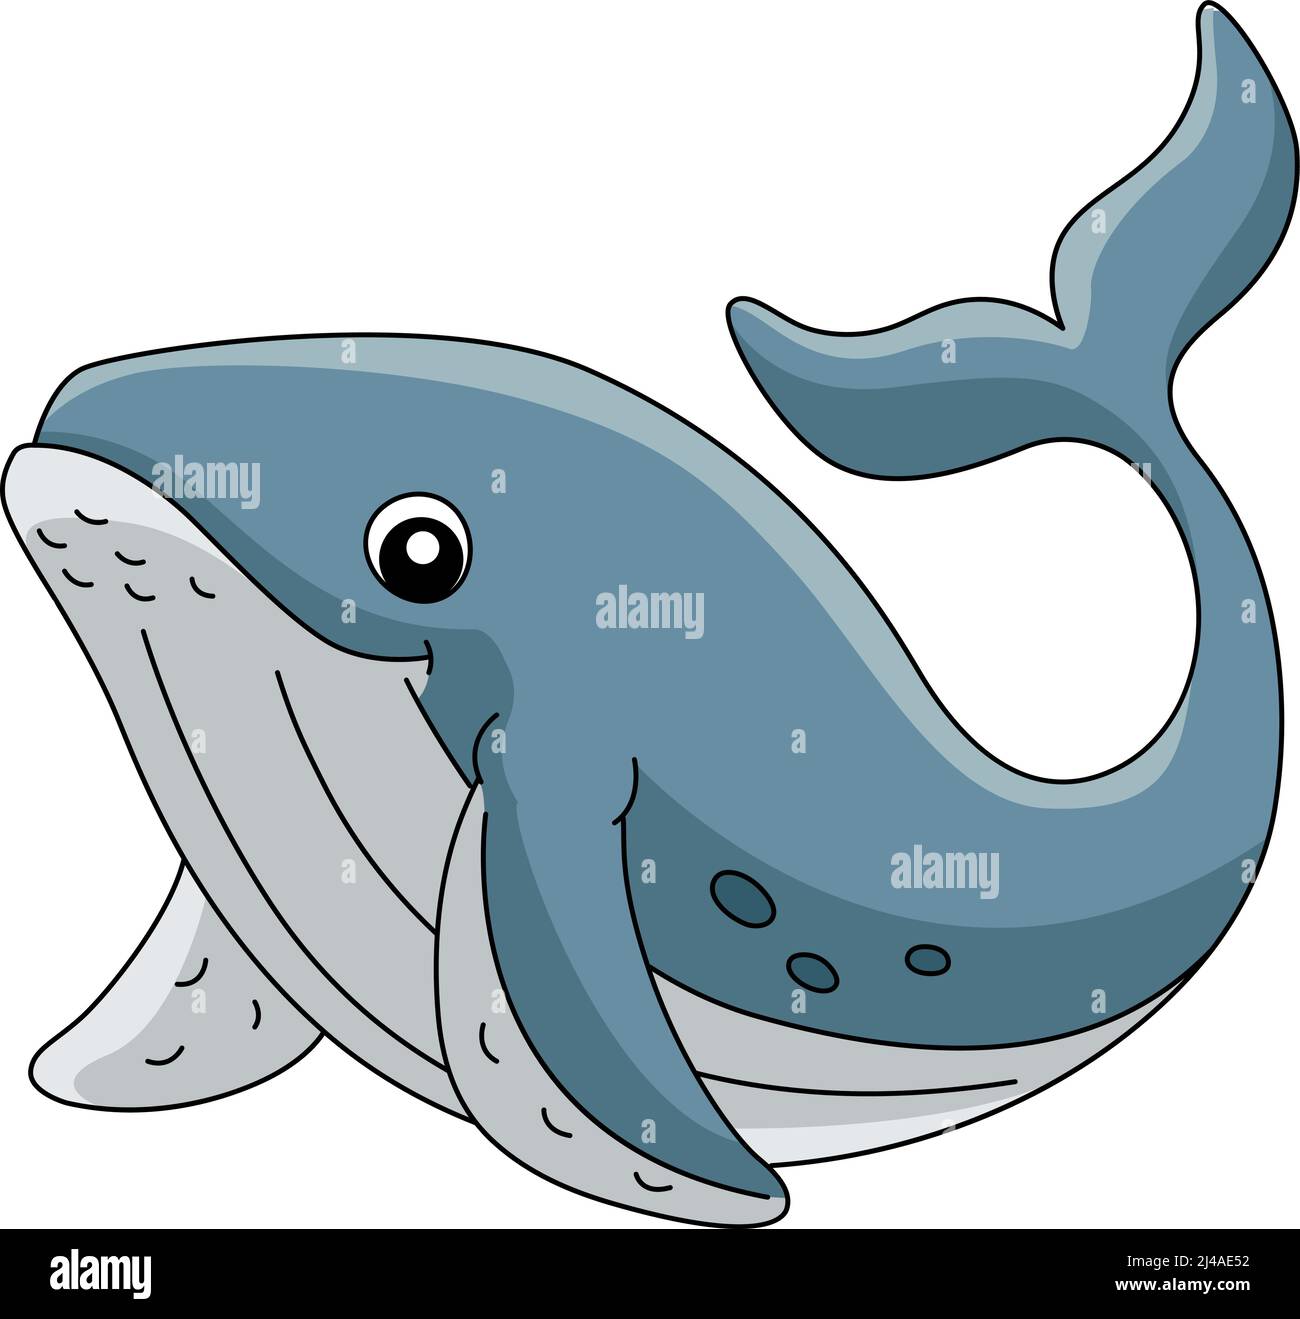 Dibujos animados de ballena fotografías e imágenes de alta resolución -  Alamy